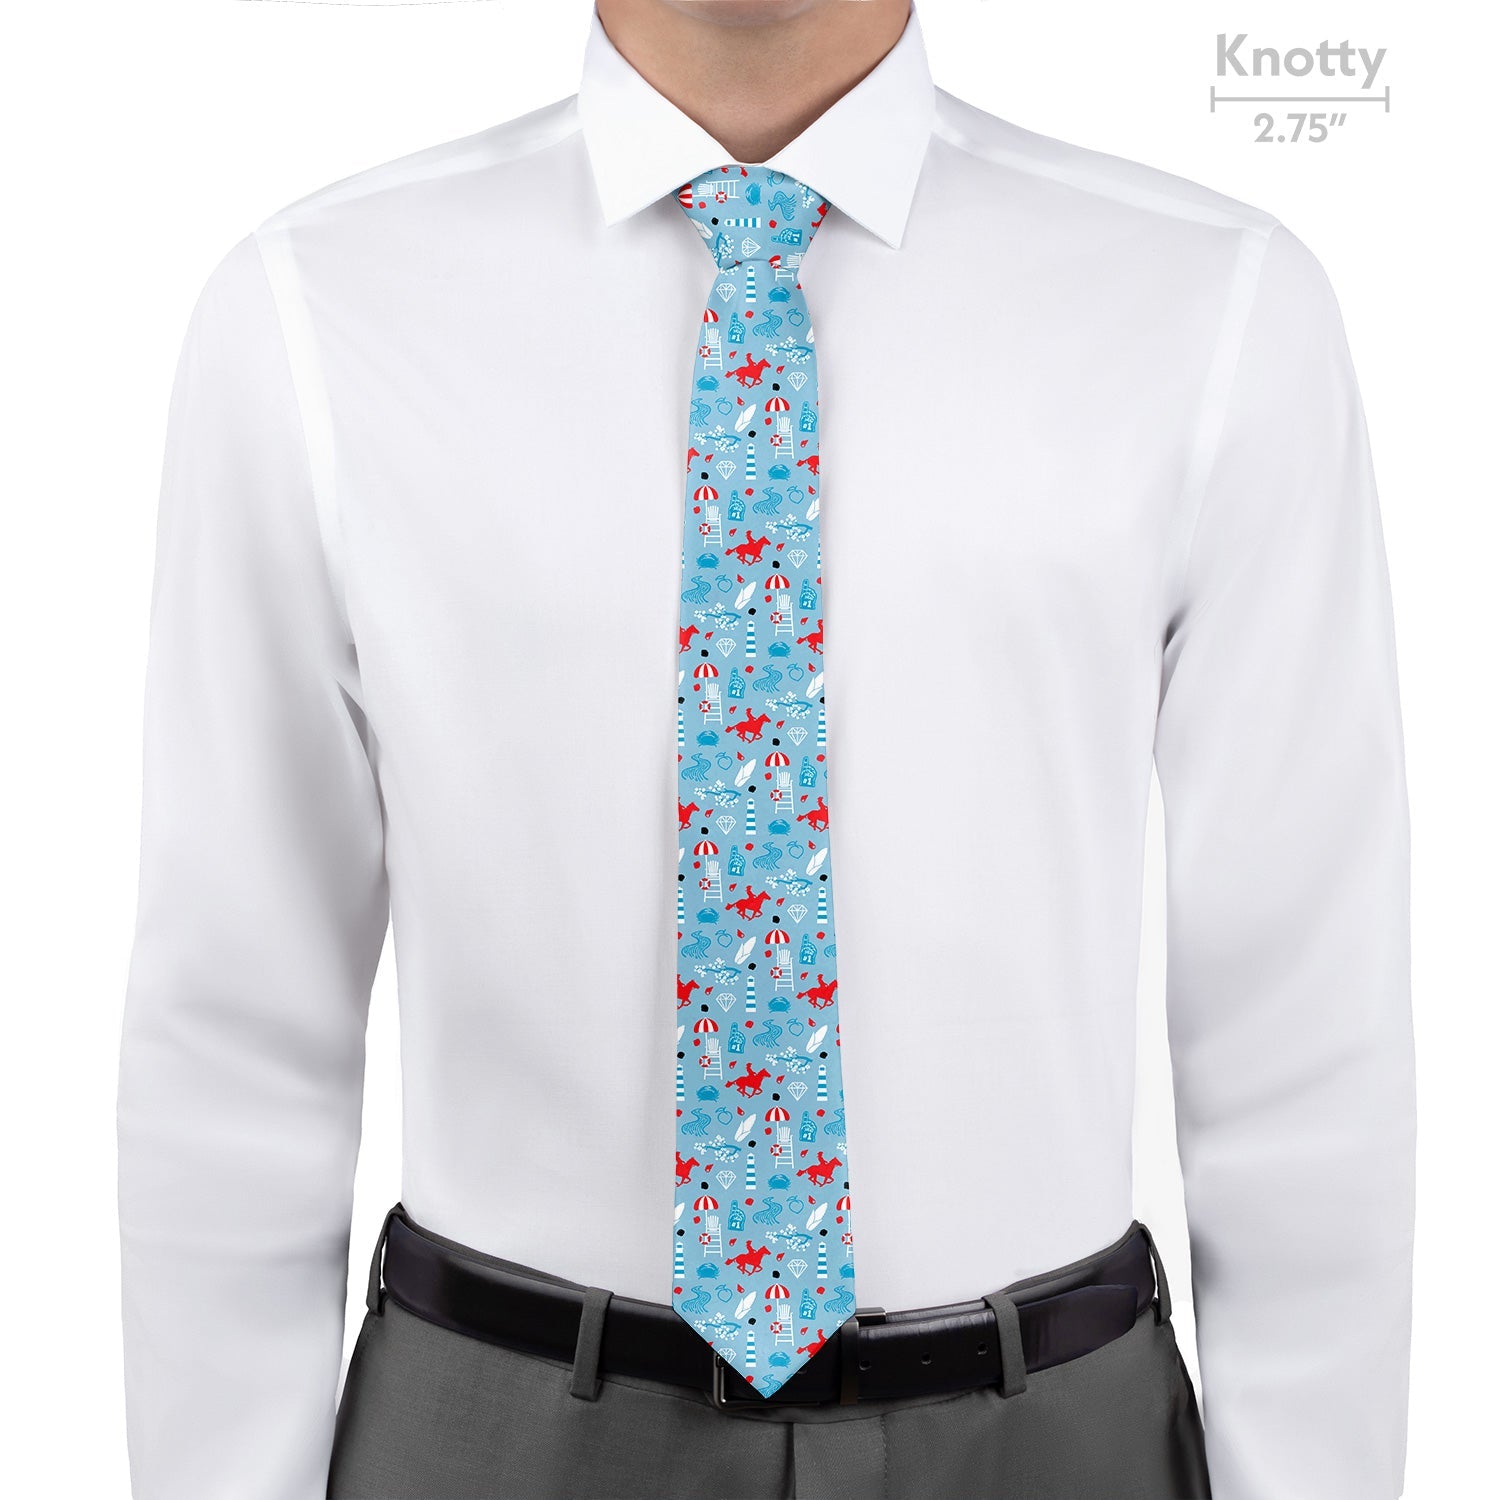 Delaware State Heritage Necktie - Knotty - Knotty Tie Co.